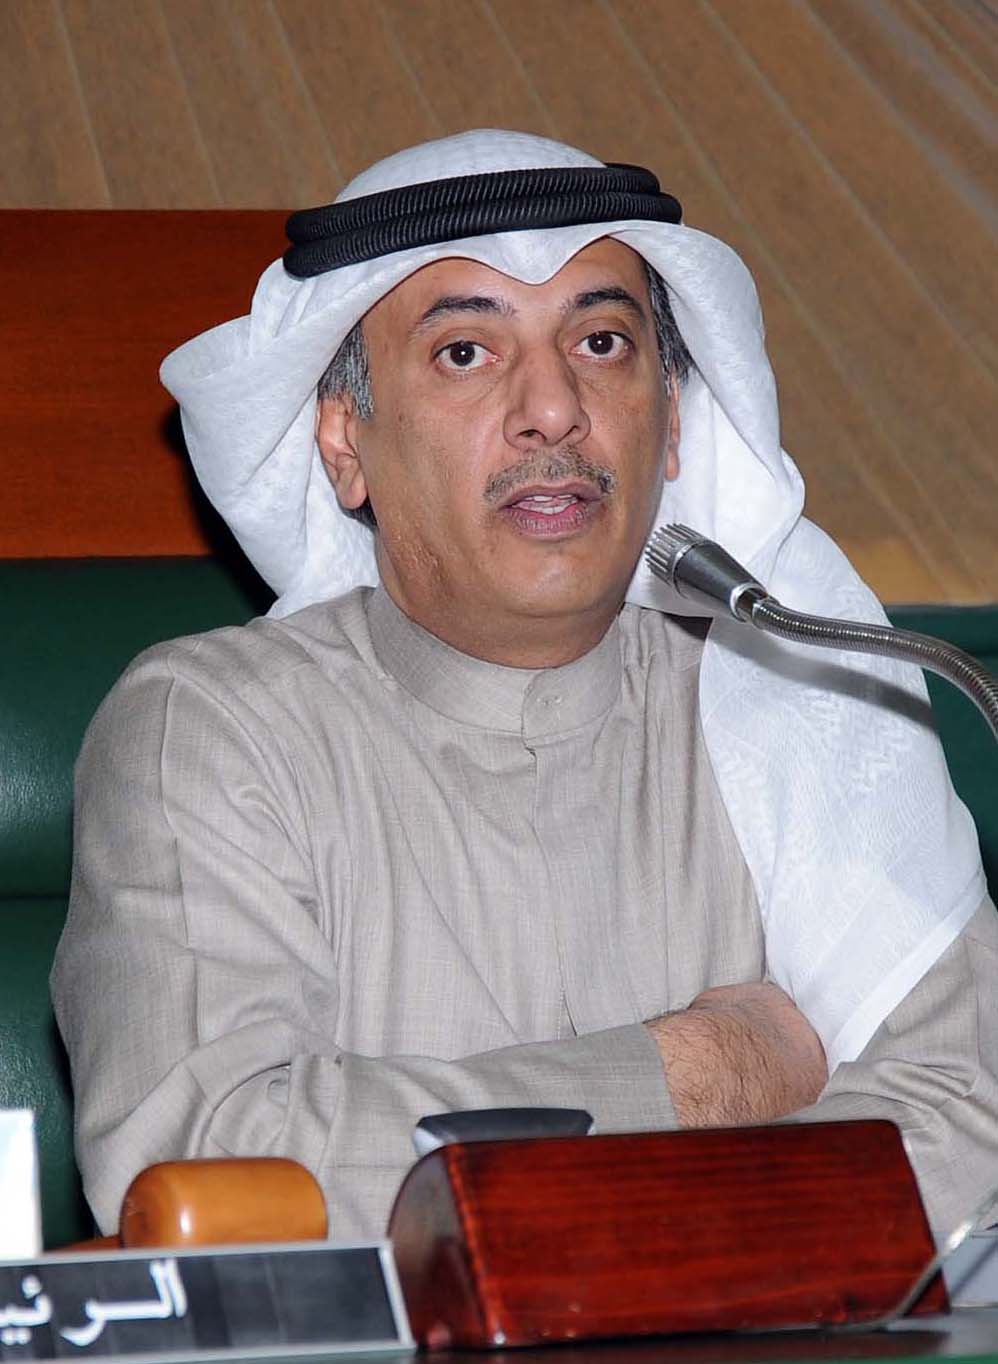 Chairman of the Municipal Council Mahlhal Al-Khaled